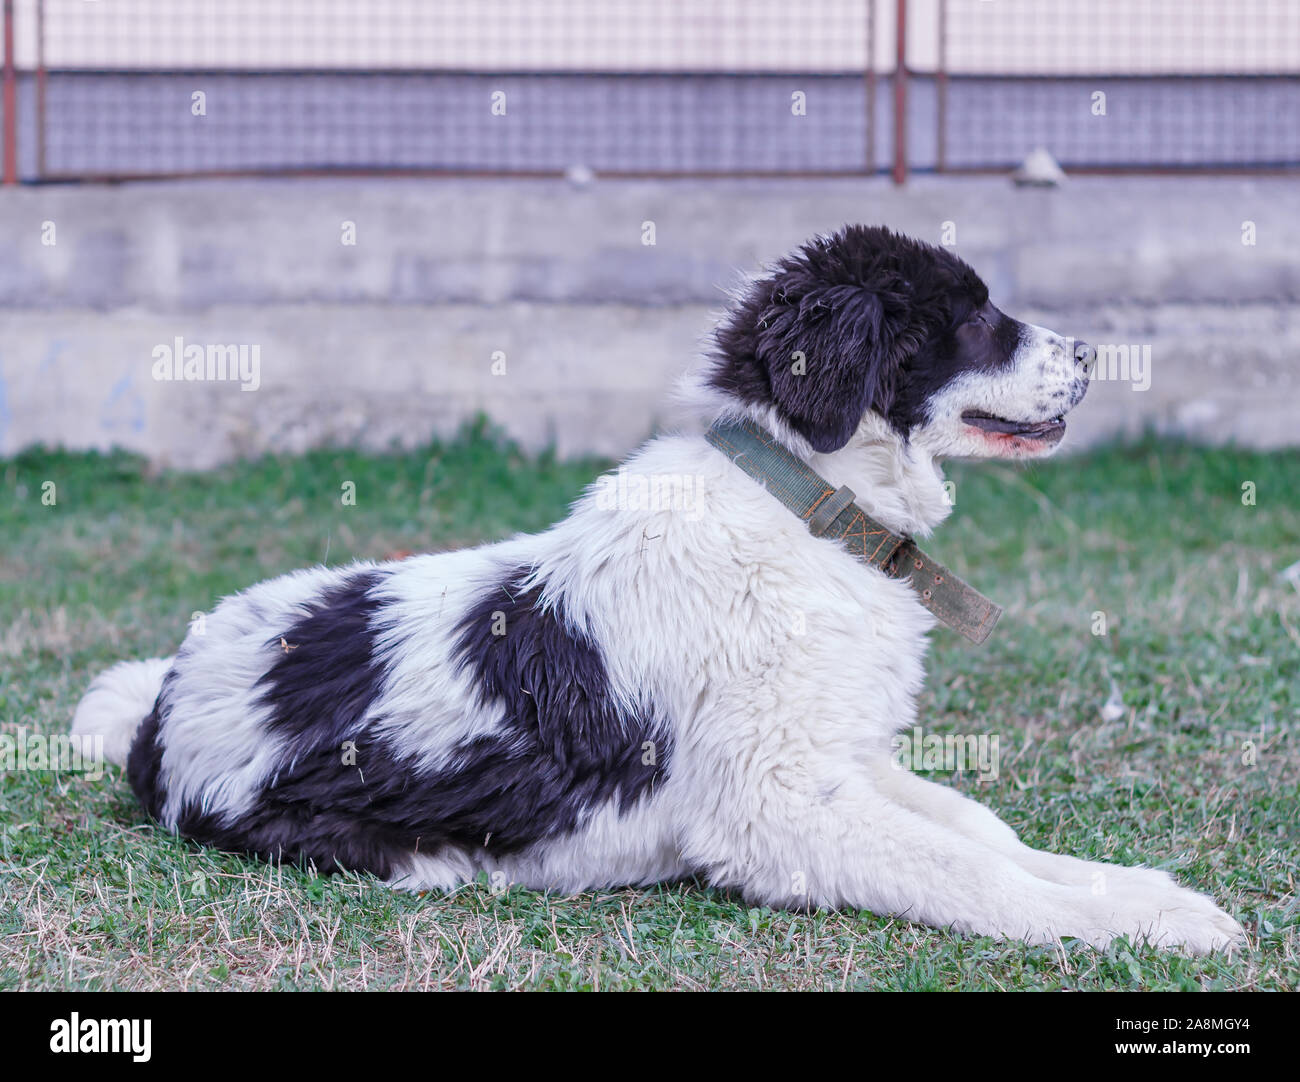 Bucovina Shepherd Dog High Resolution Stock Photography And Images Alamy